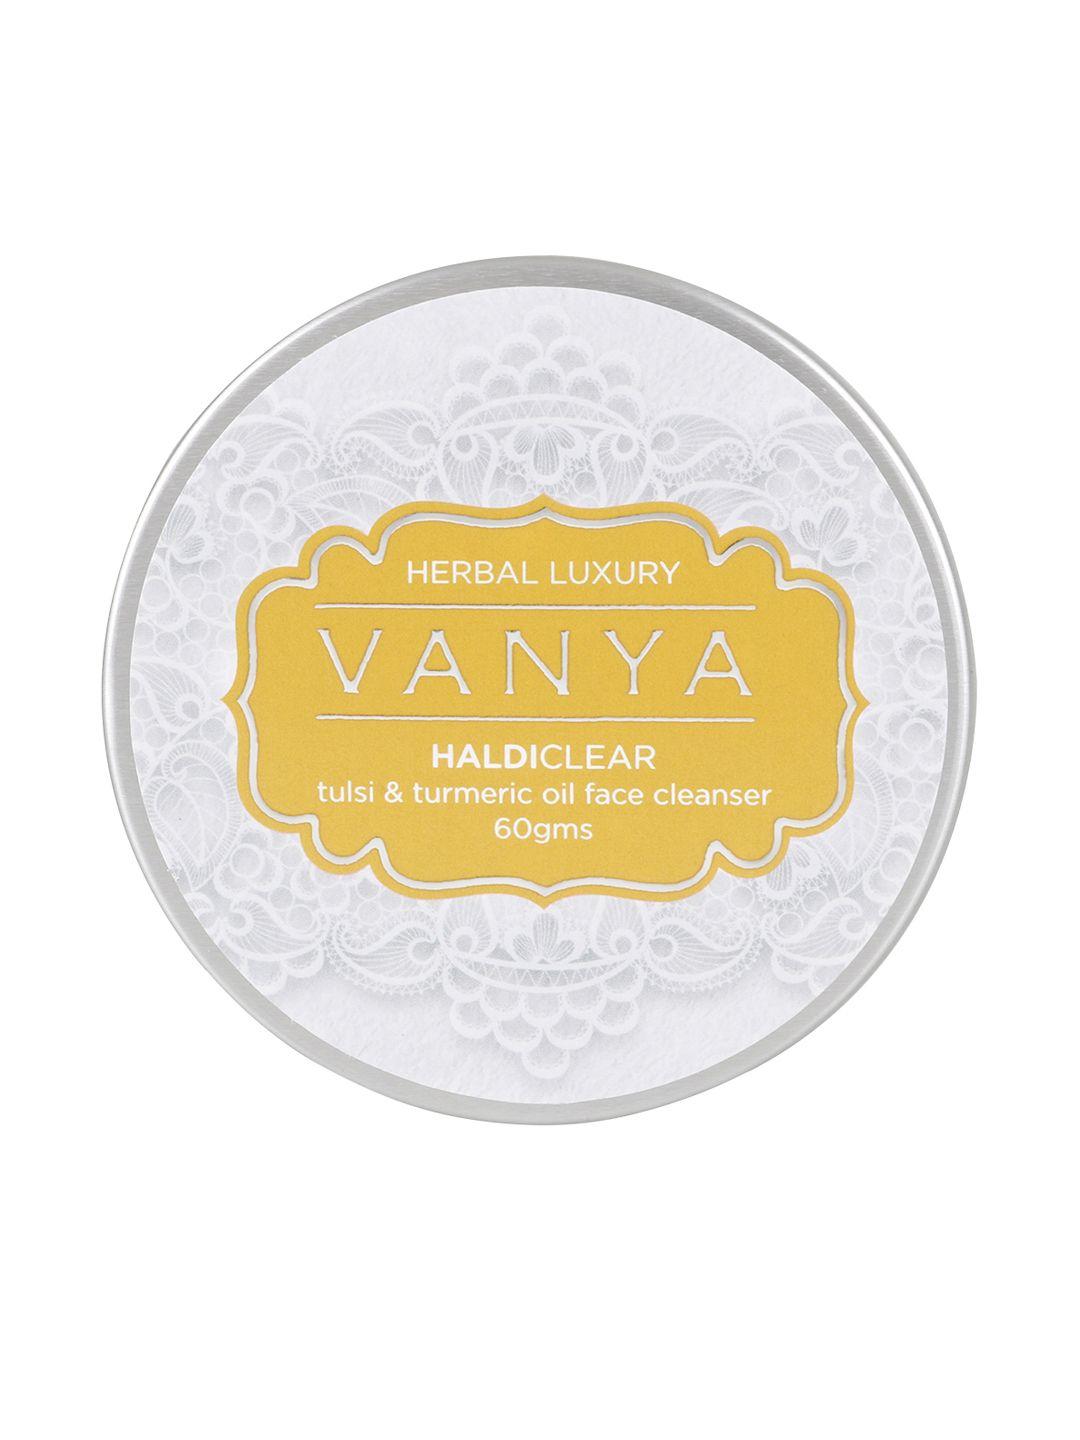 herbal luxury vanya haldi clear/ tulsi & turmeric oil face cleanser 60 g